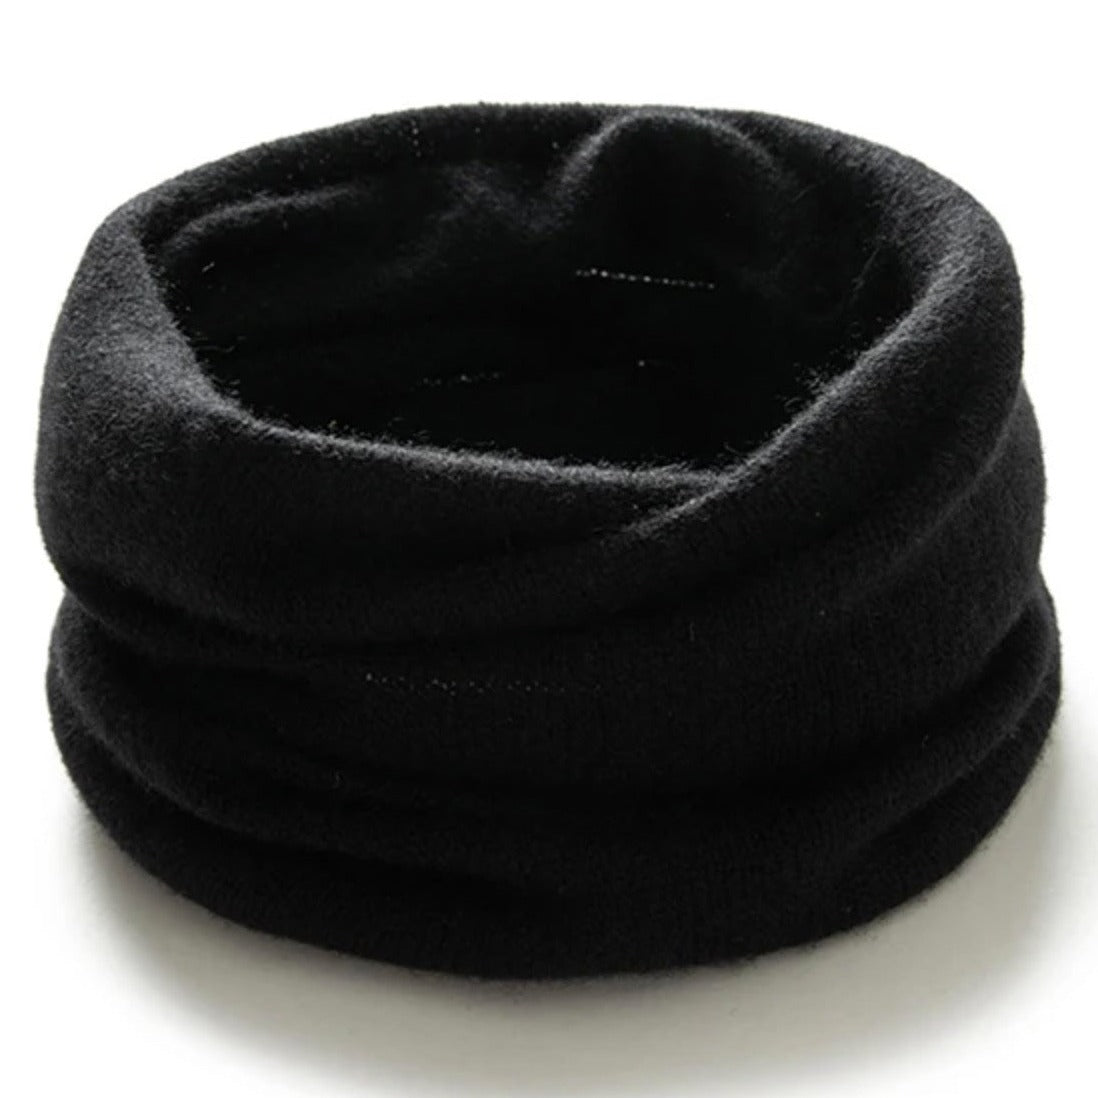 Black Natural 100% cashmere neck warmer, shop Canada cashmere clothes, scarves, shawls